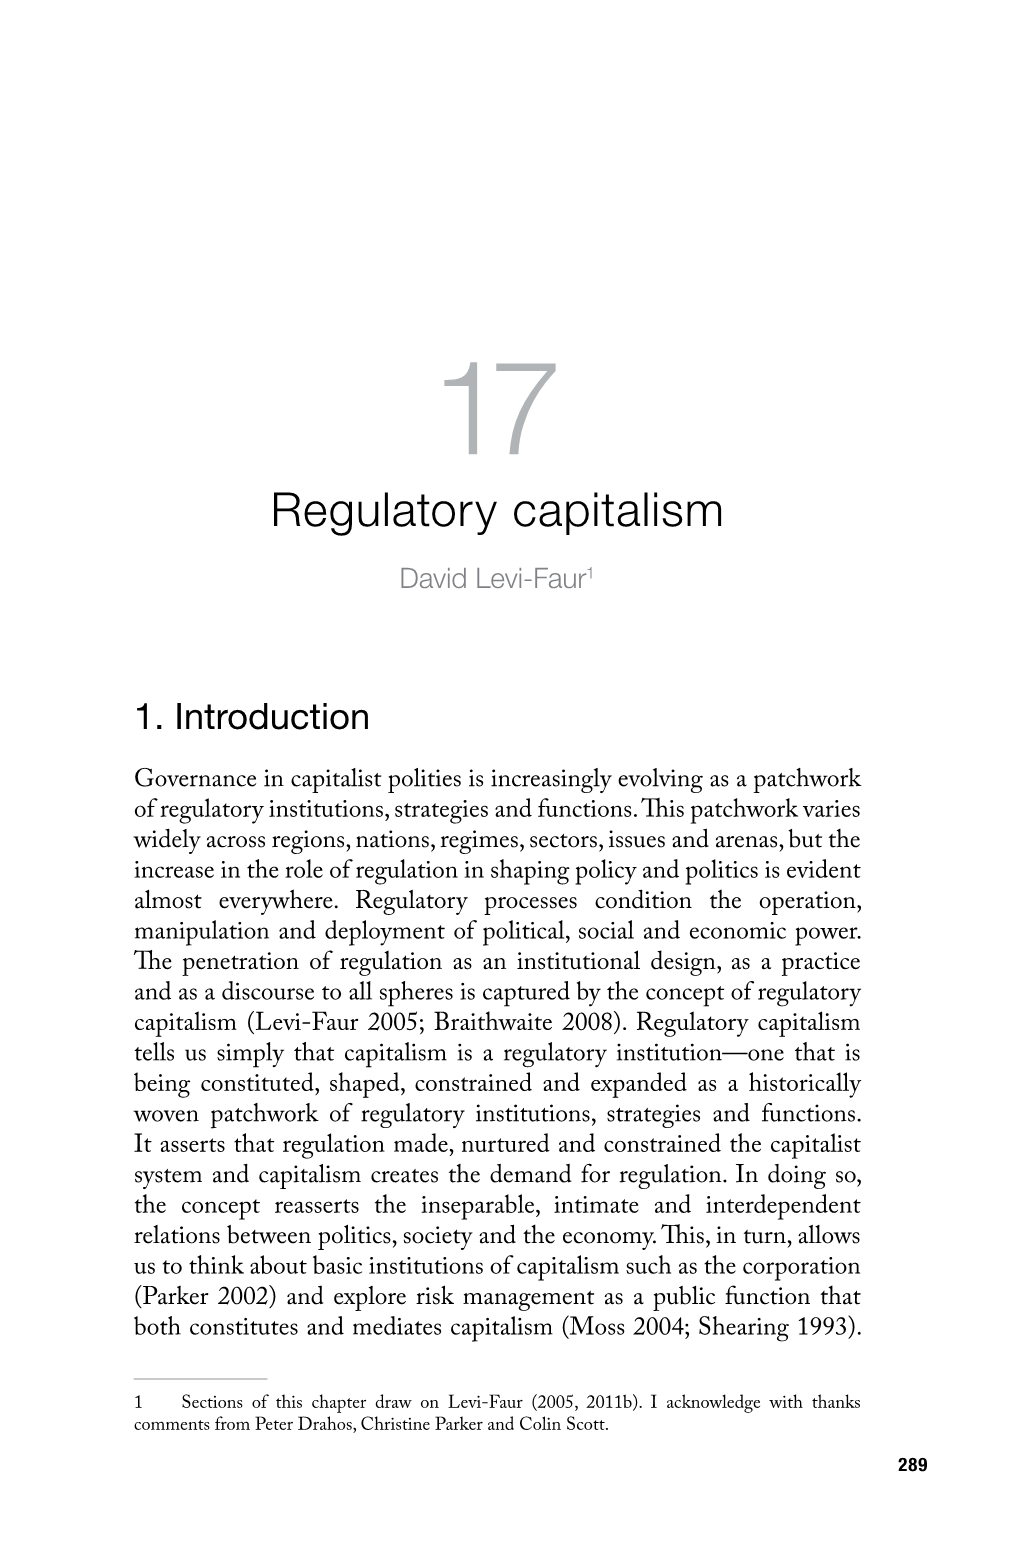 Regulatory Capitalism David Levi-Faur1